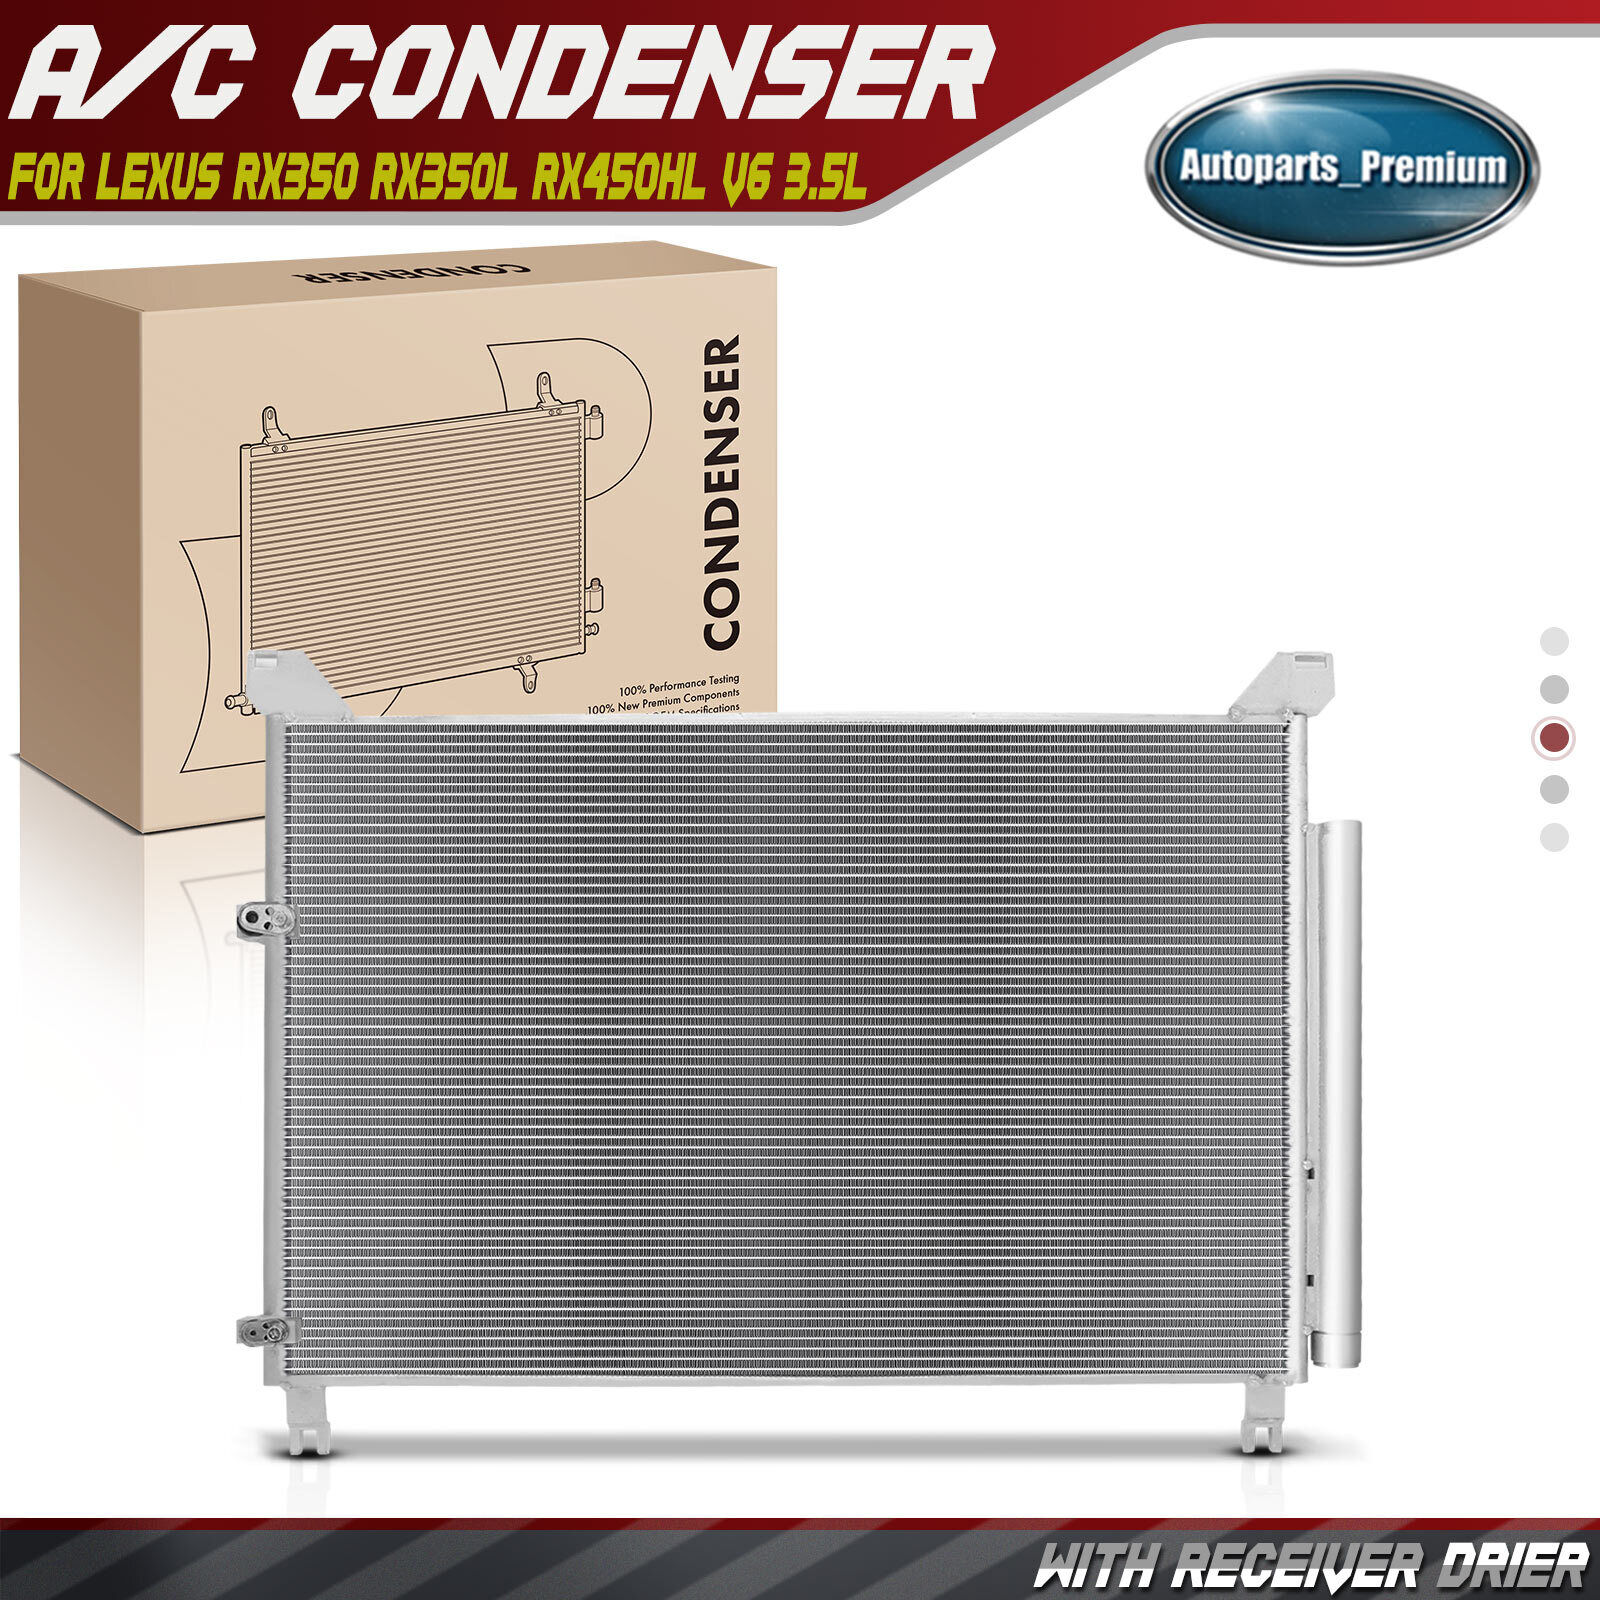 New A/C AC Condenser w/ Receiver Drier for Lexus RX350 RX350L RX450hL V6 3.5L